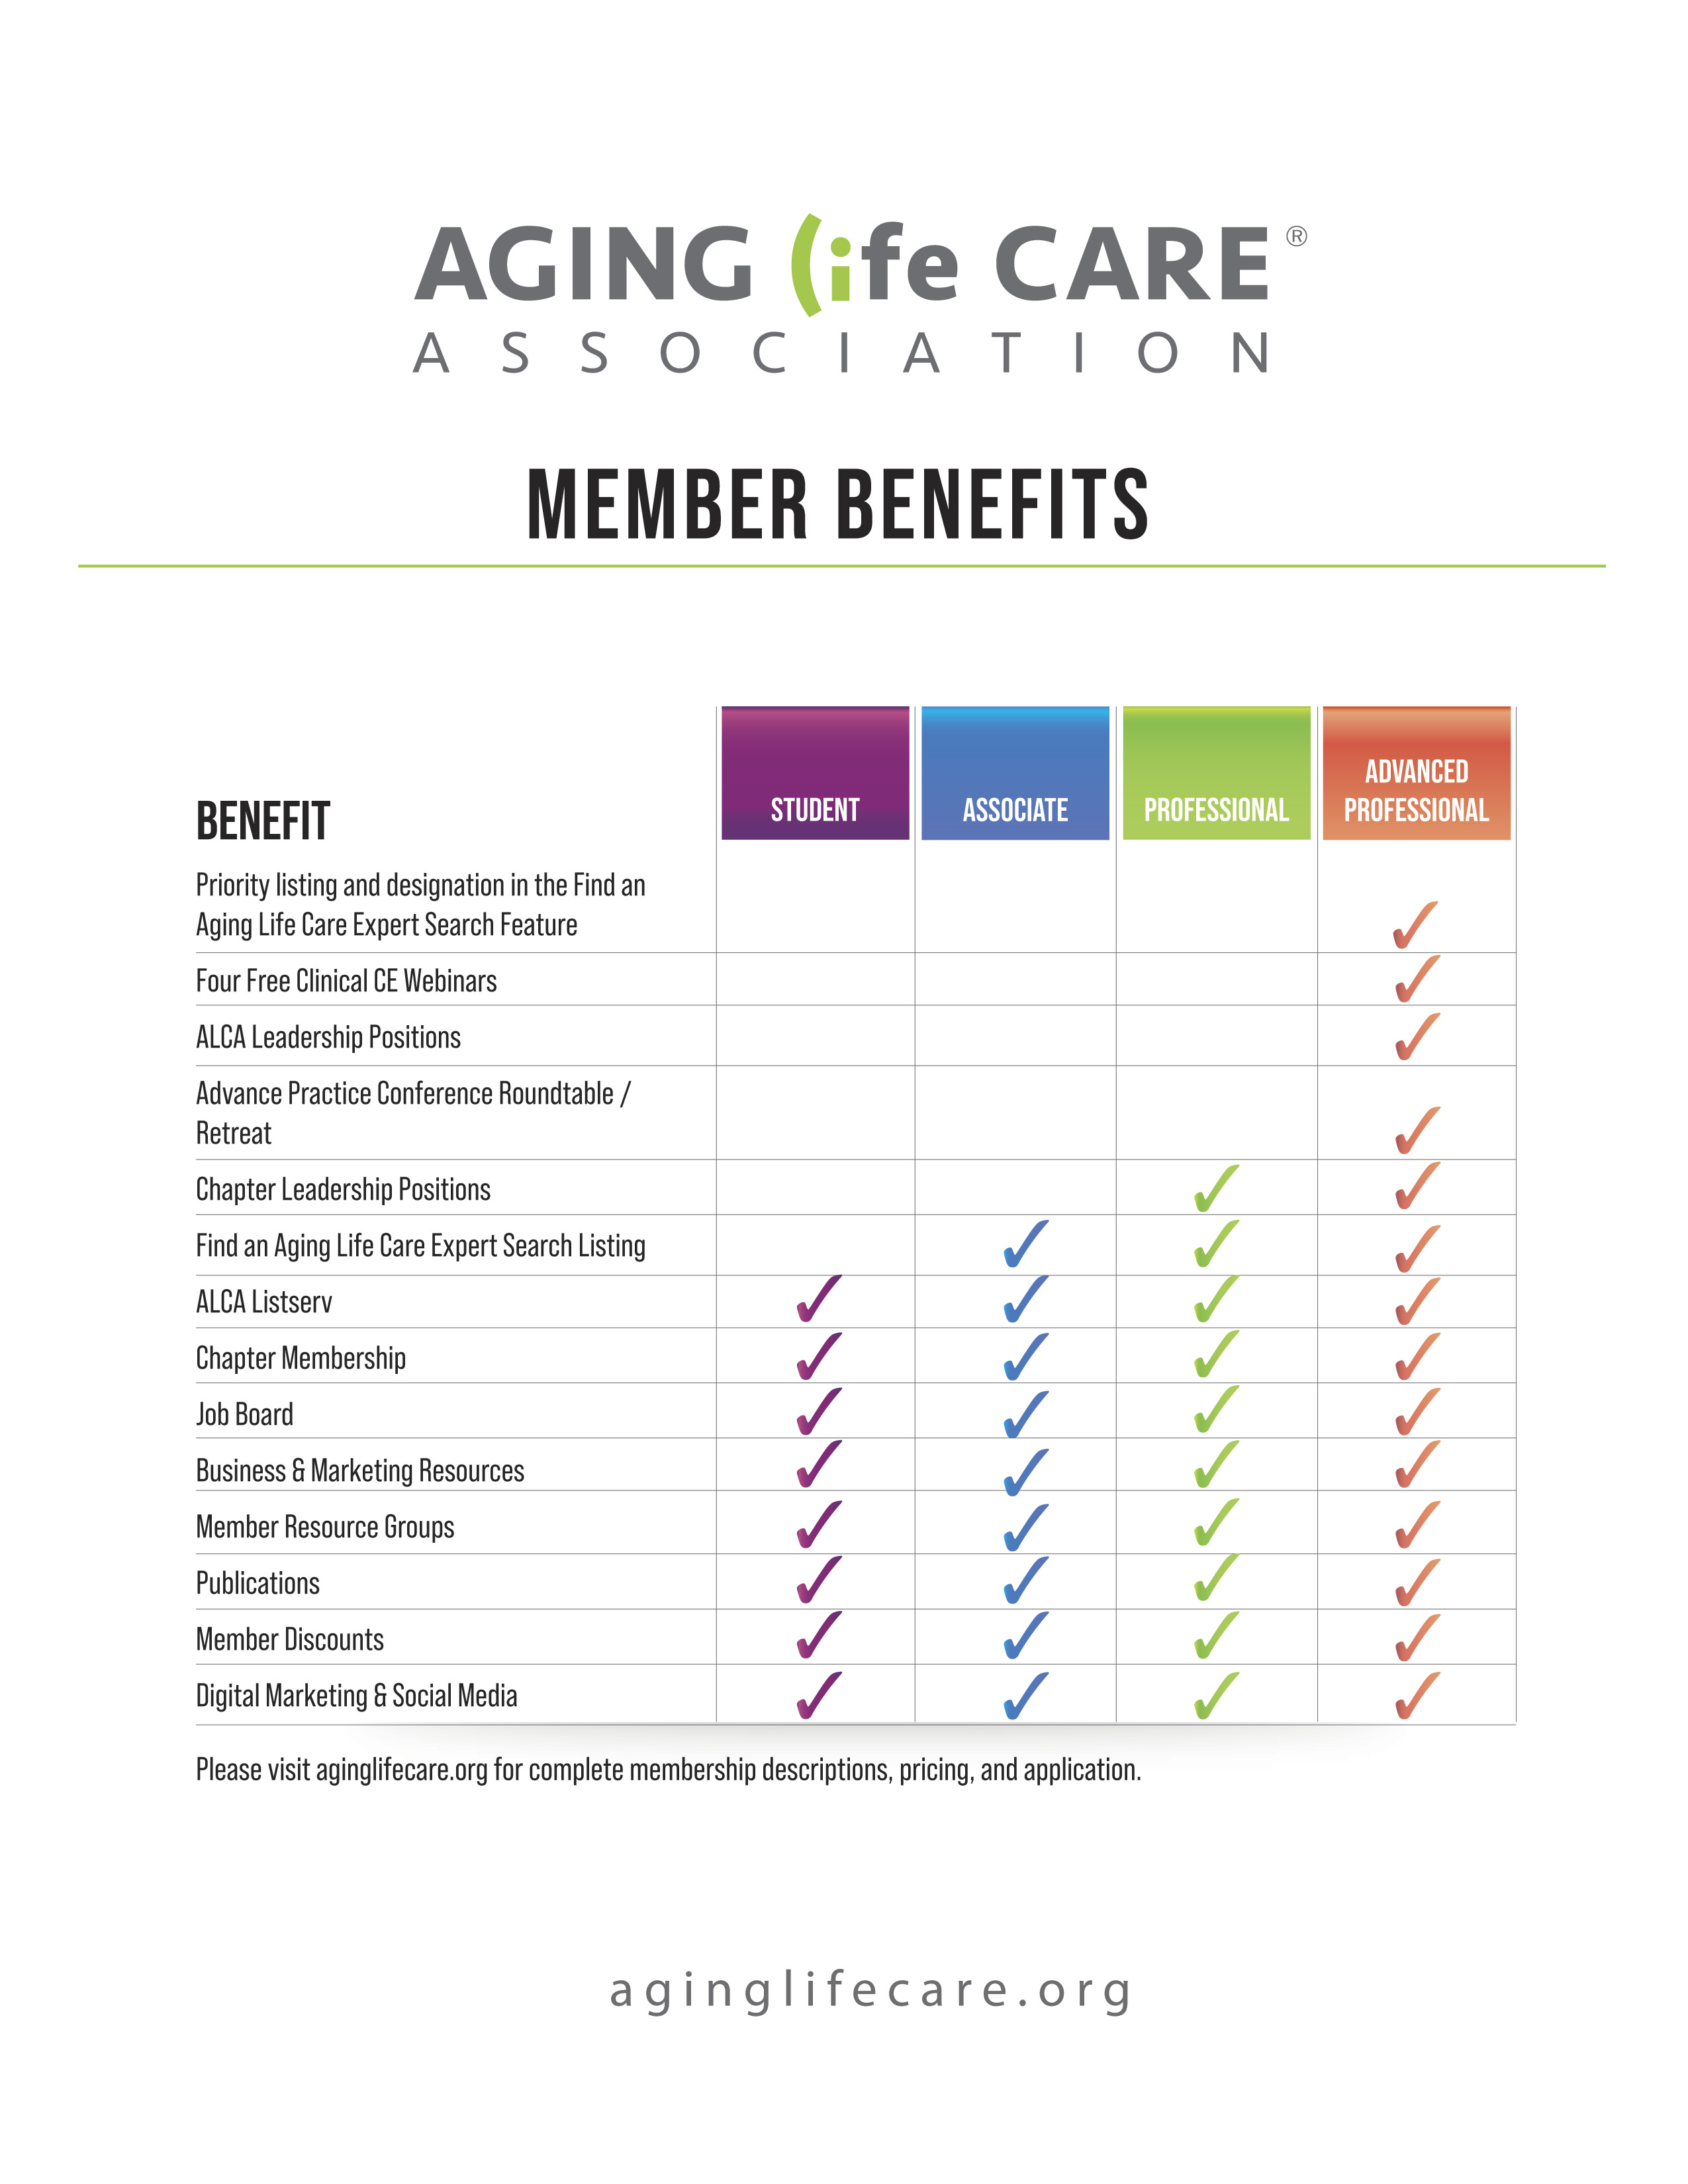 ALCA membership benefits graphic